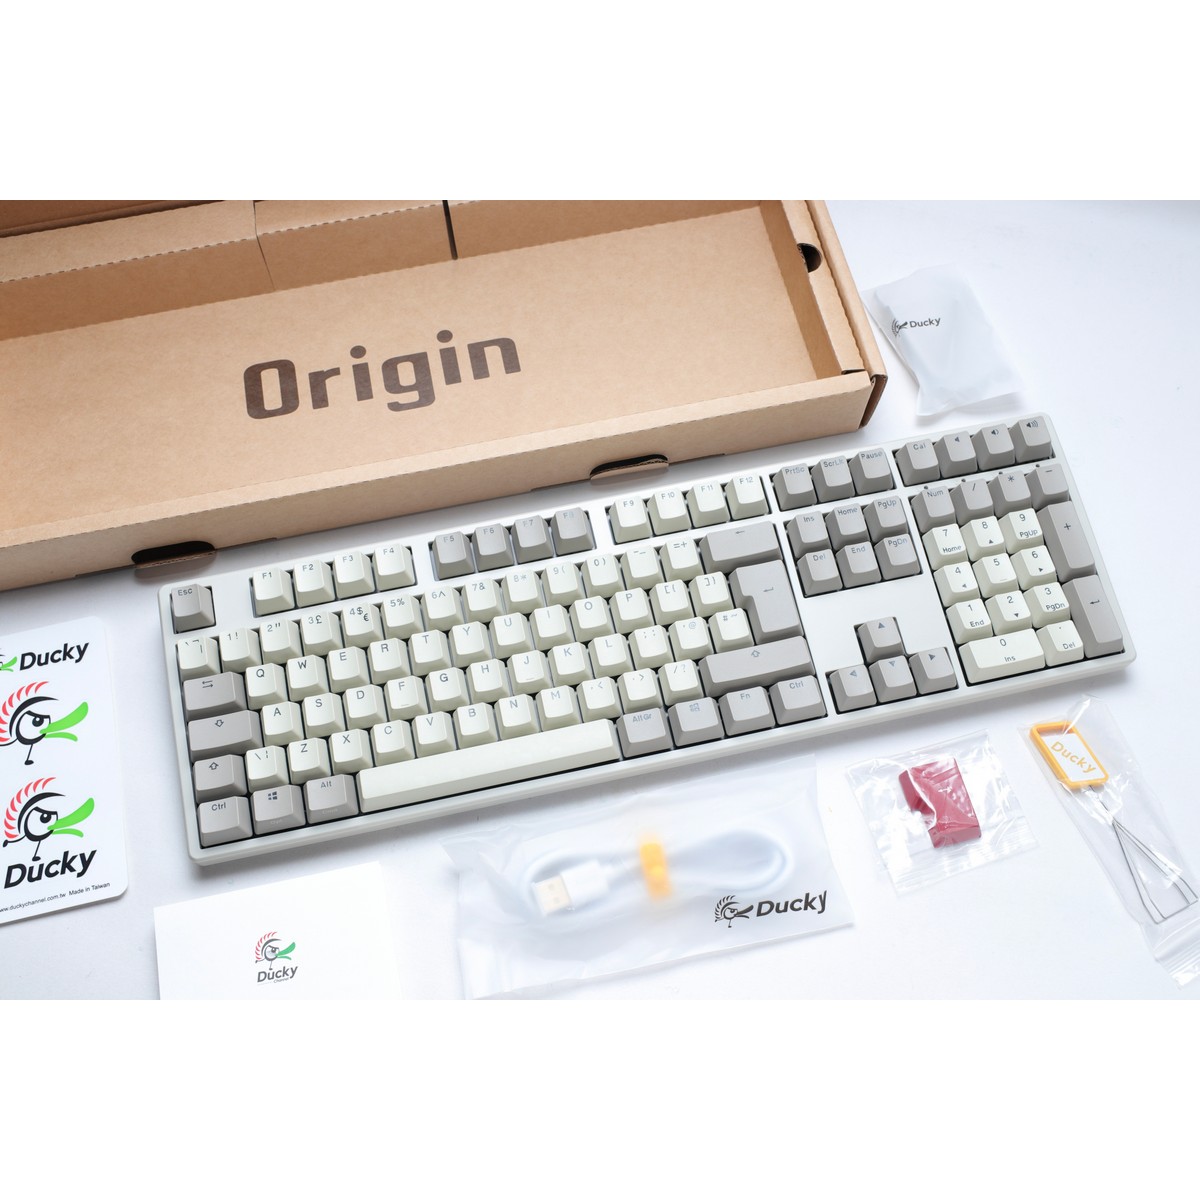 Ducky - Ducky Origin USB Mechanical Gaming Keyboard Cherry MX Brown - Vintage UK Layout